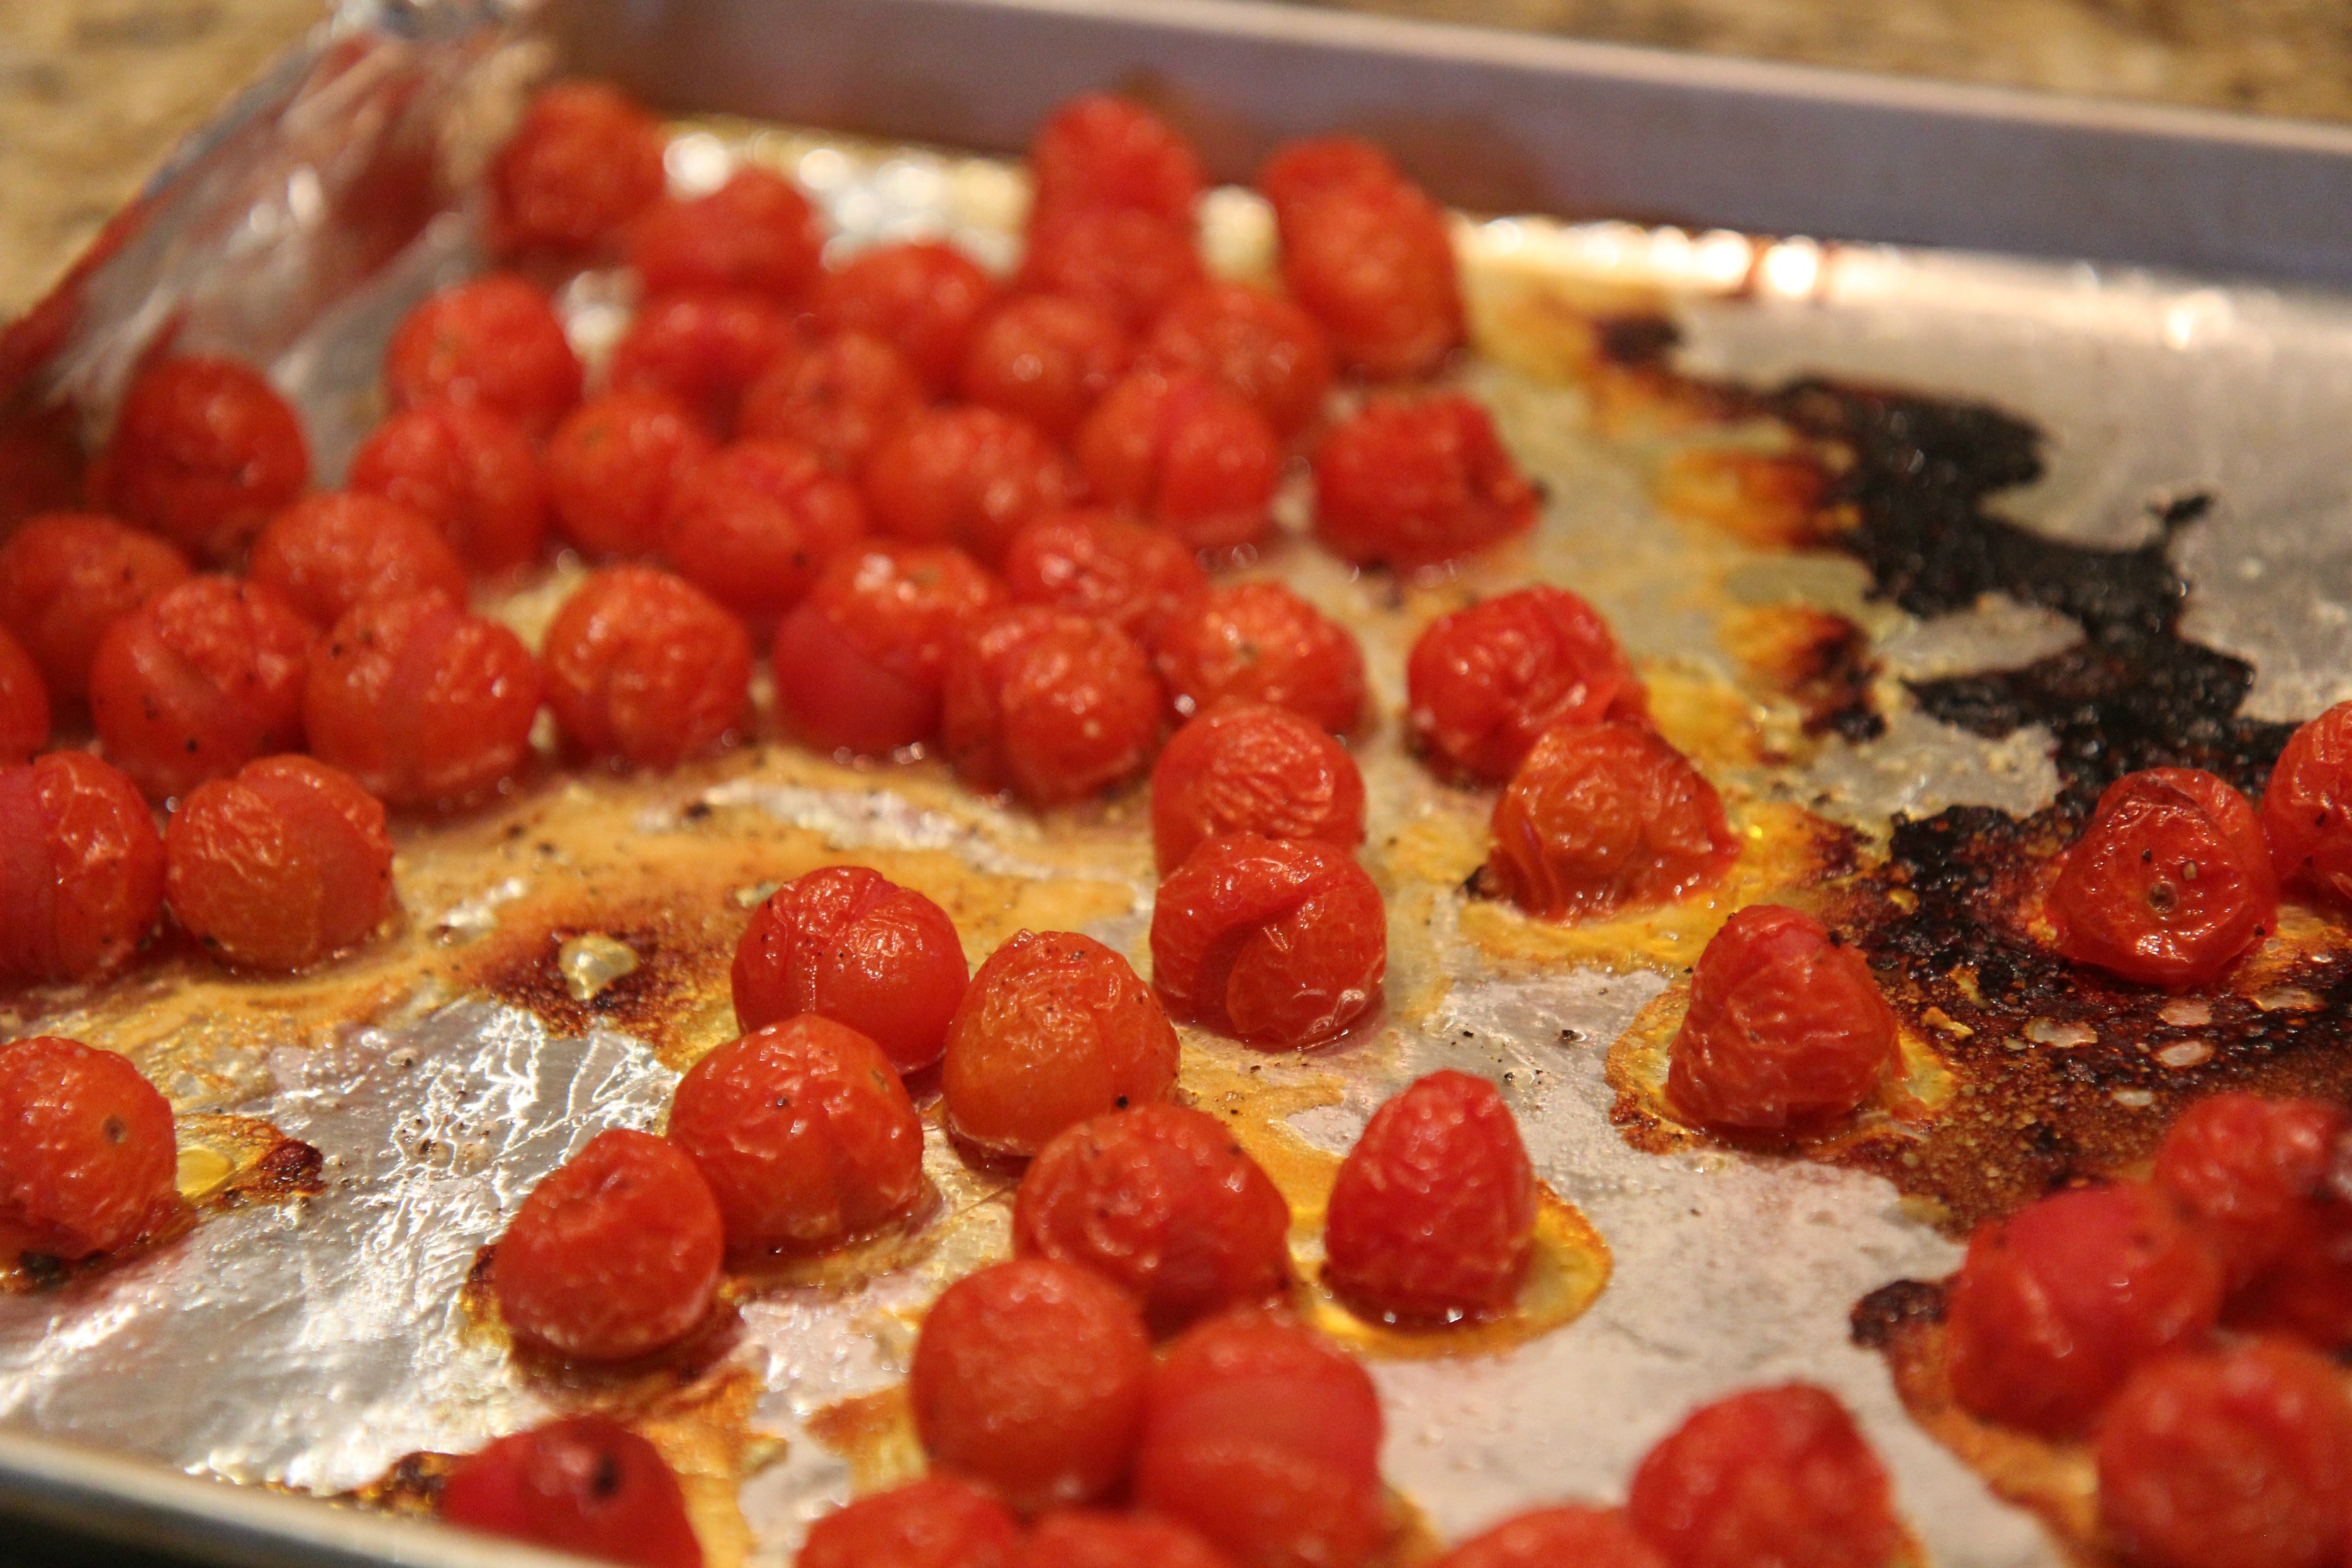 Roast the tomatoes